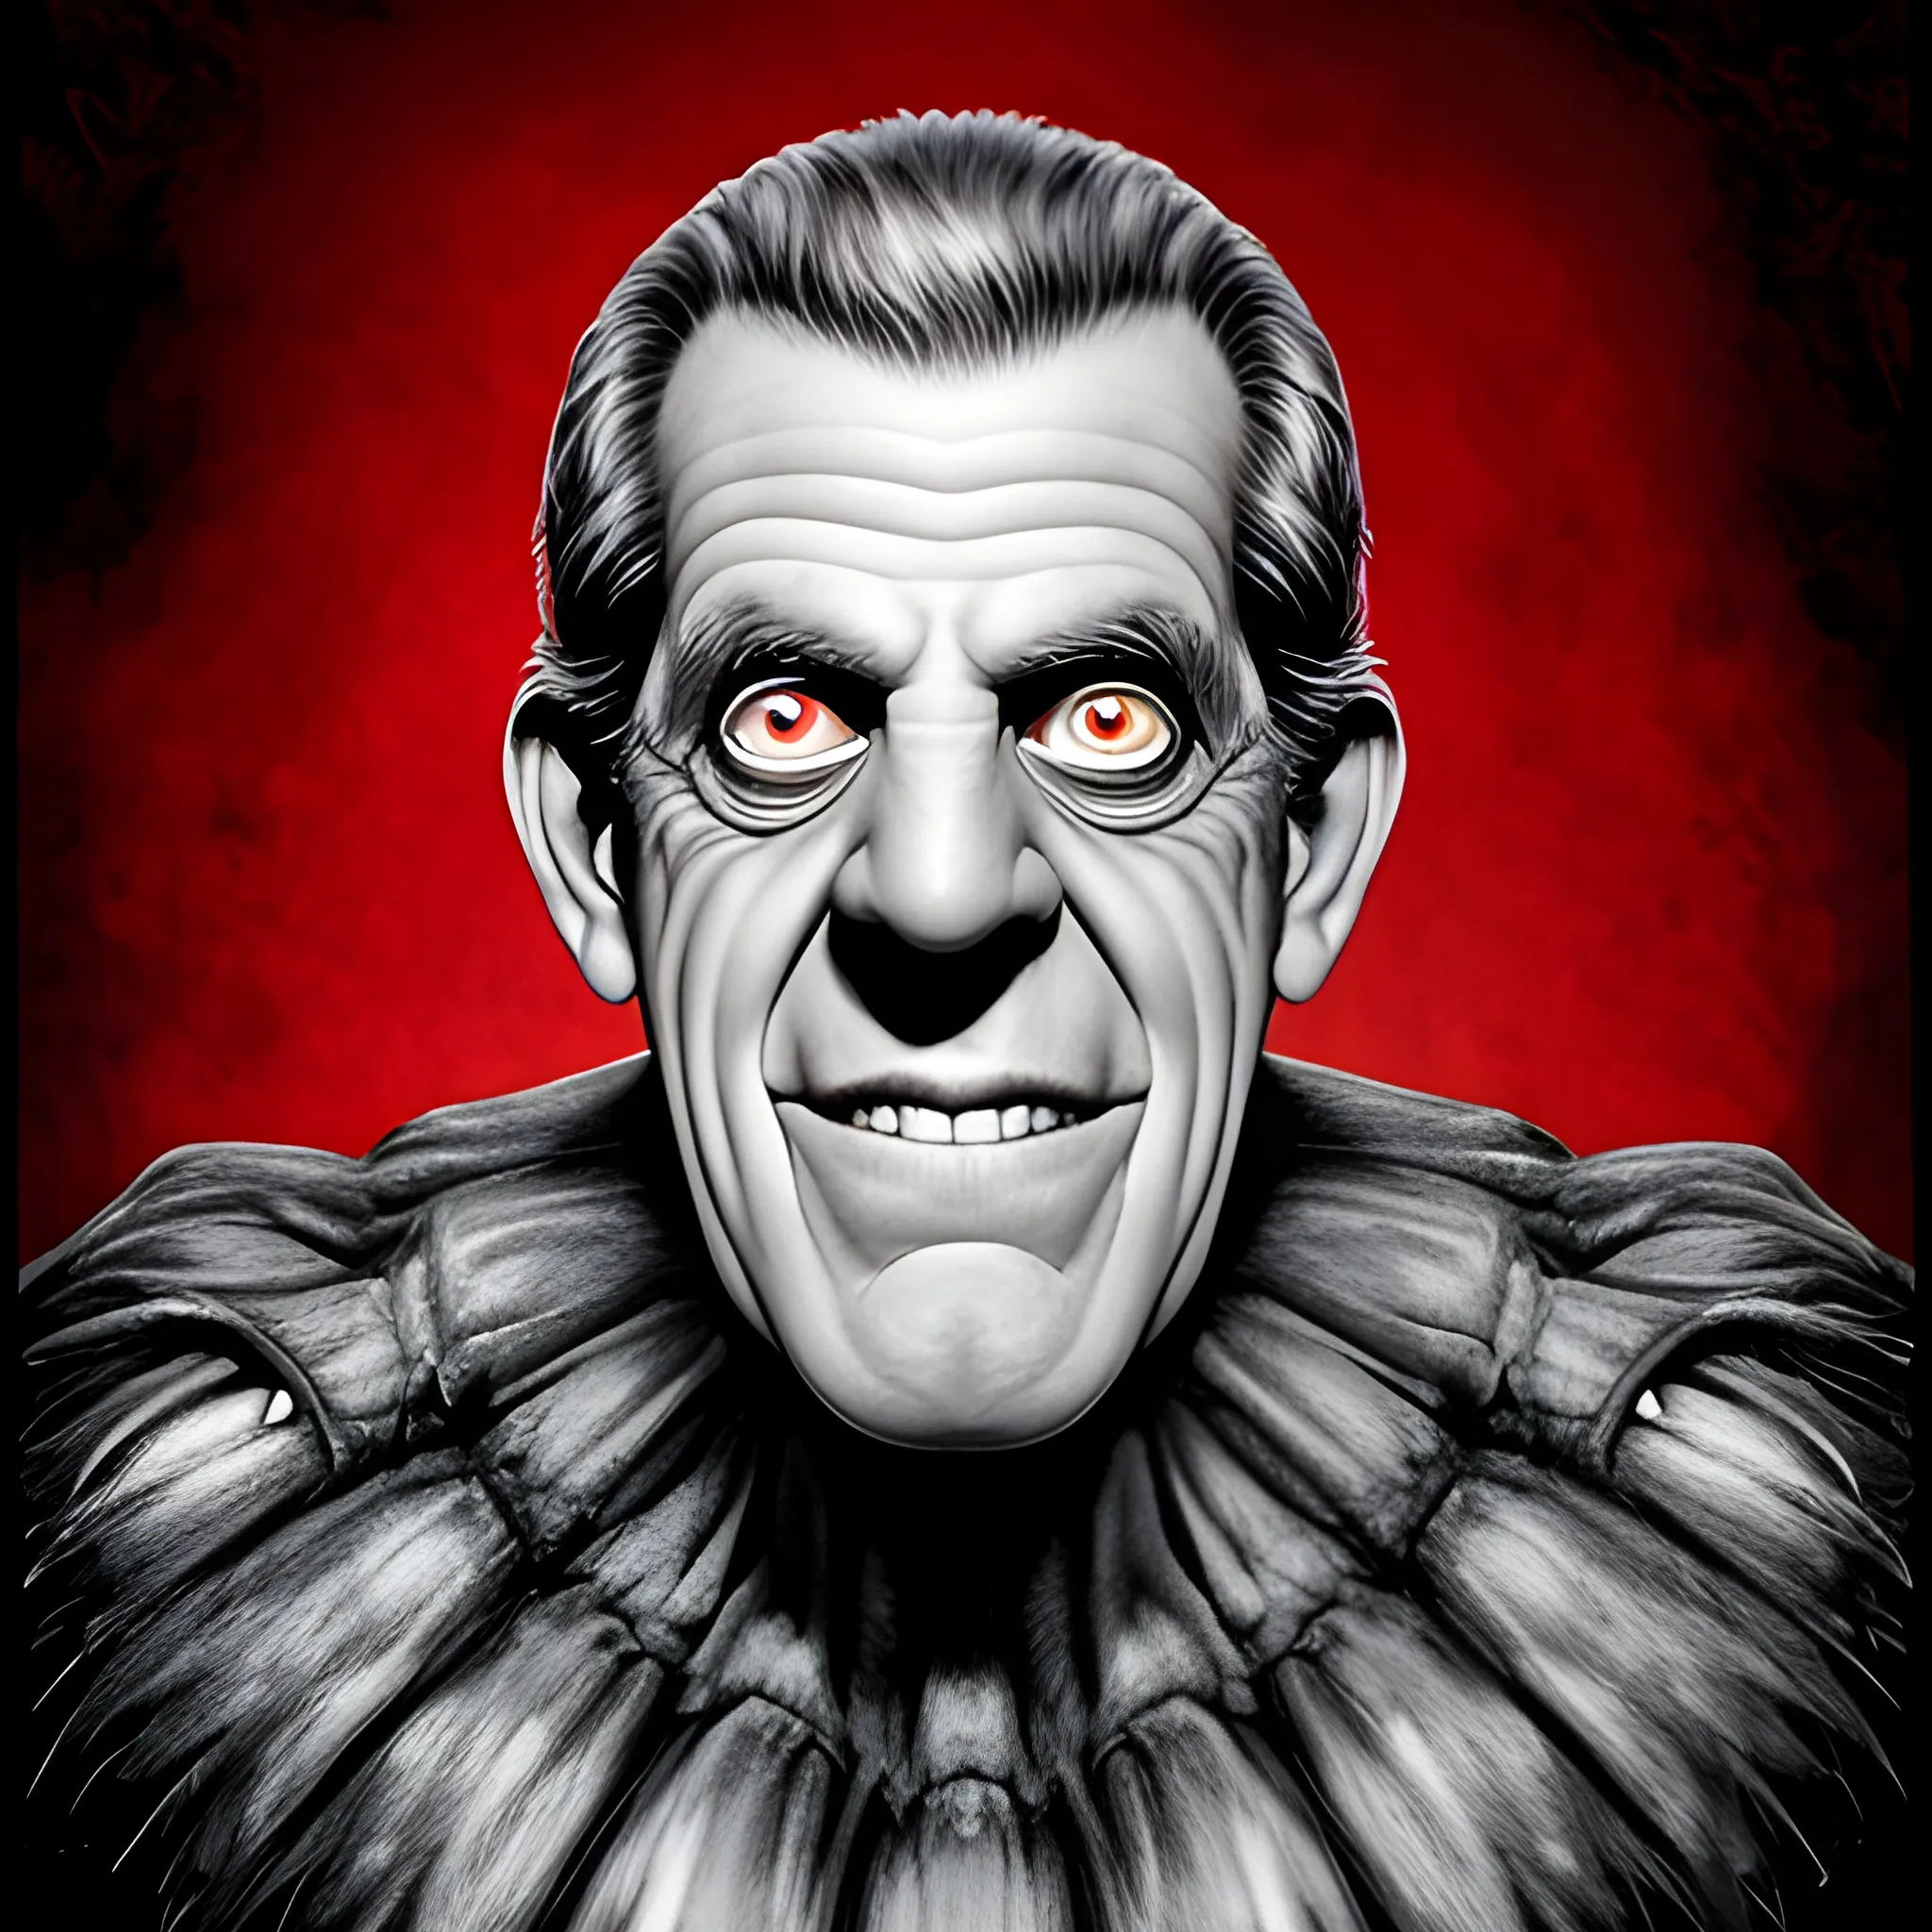 Fred gwynne as monster portrait 